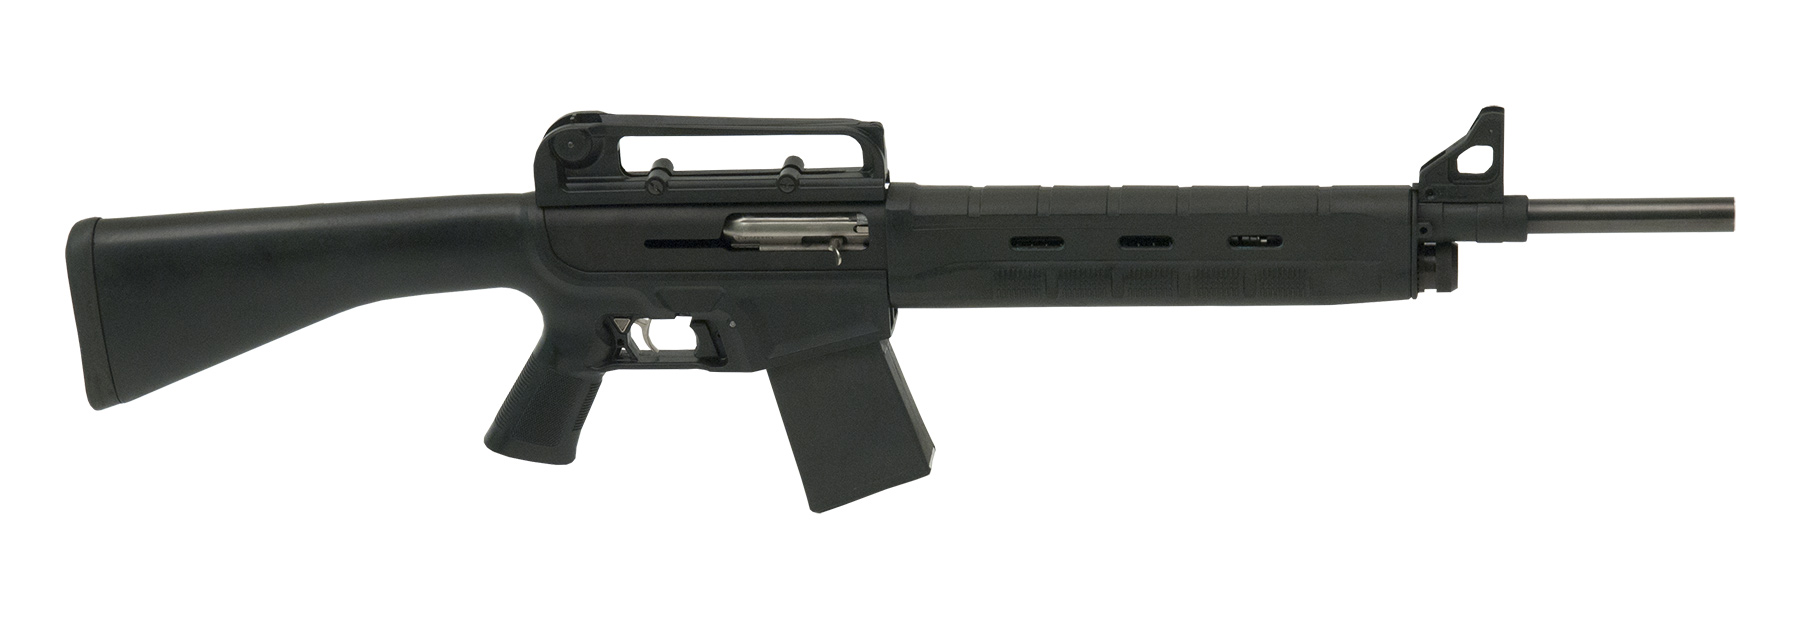 Ружье охотничье самозарядное TG1 калибра 12Х76 (Kalashnikov)